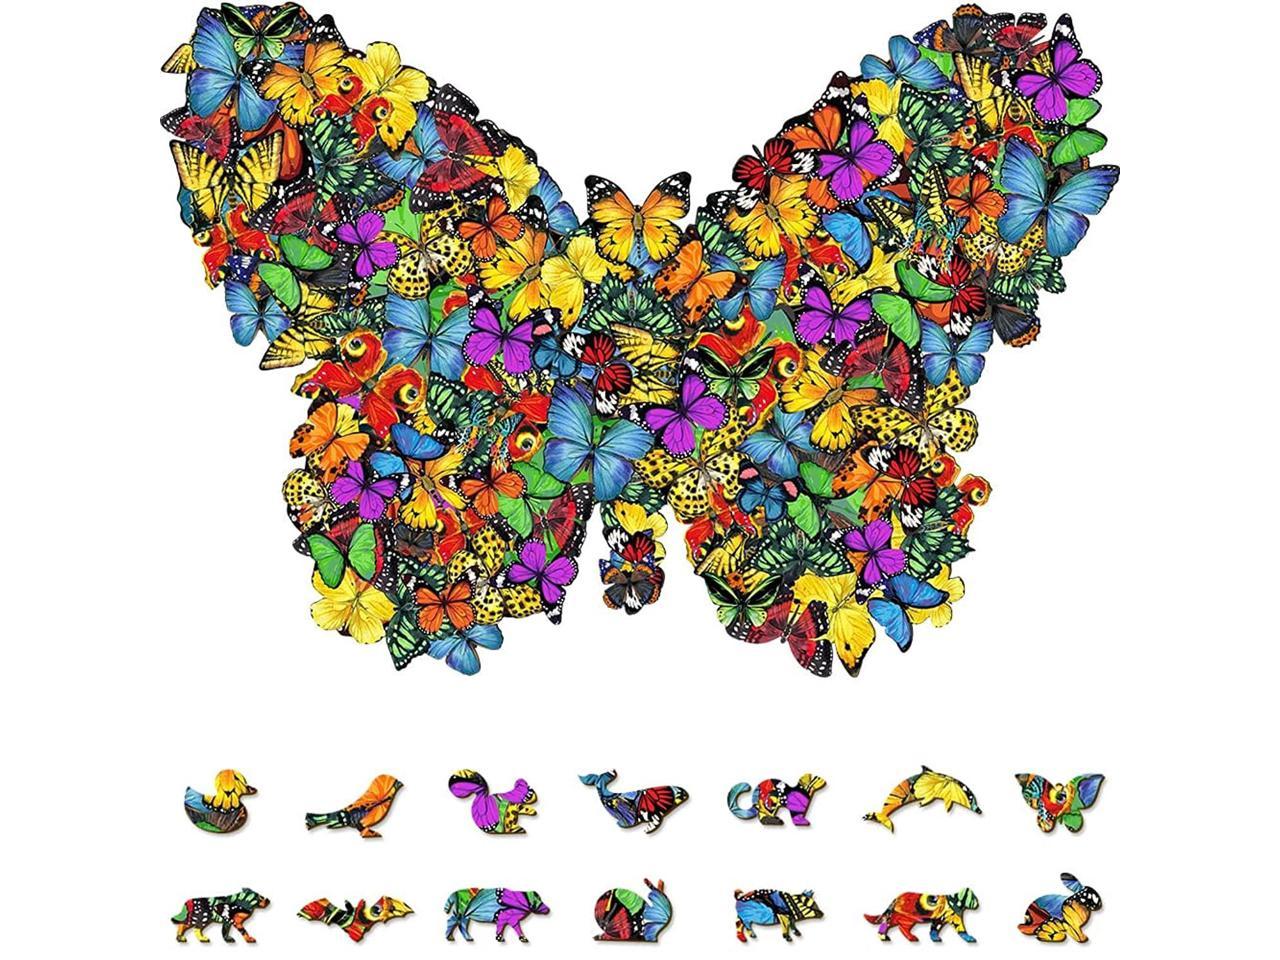 Intergalaxy butterfly 146 pcs Wood Animals Puzzle Unique Shaped Jigsaw Pieces 